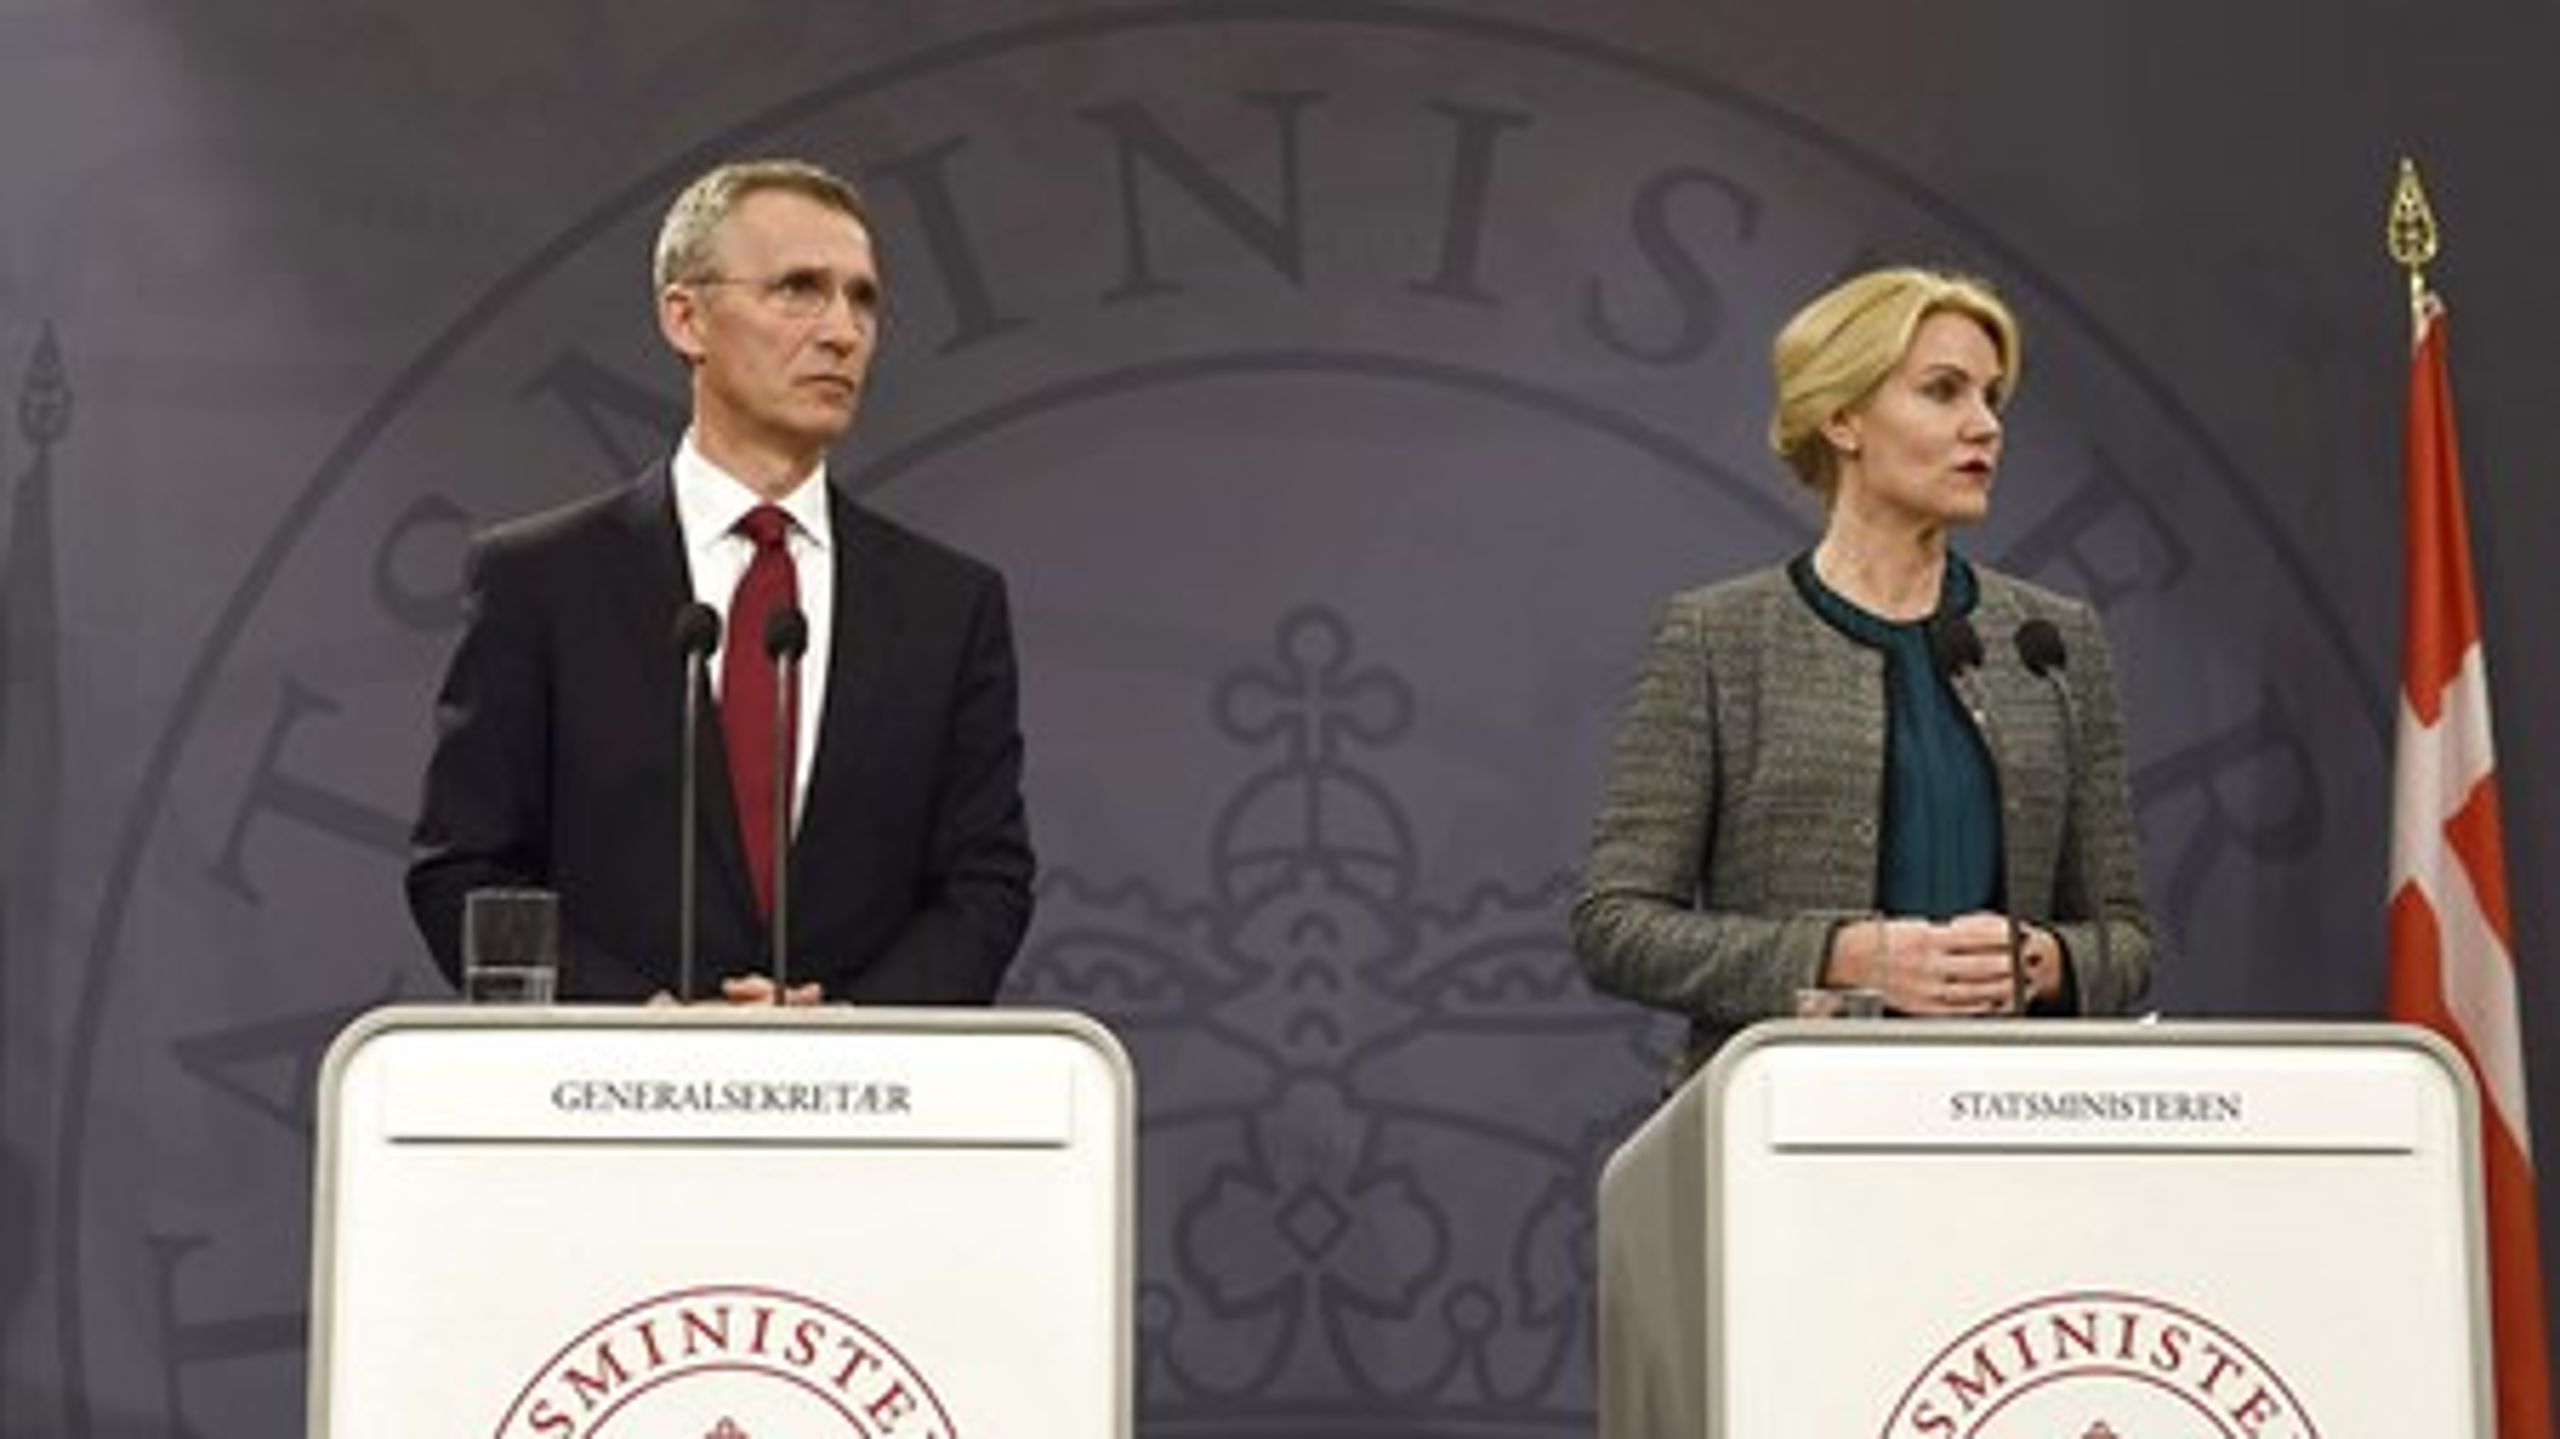 Jens Stoltenberg og Helle Thorning-Schmidt på mandagens pressemøde i Statsministeriet.&nbsp;